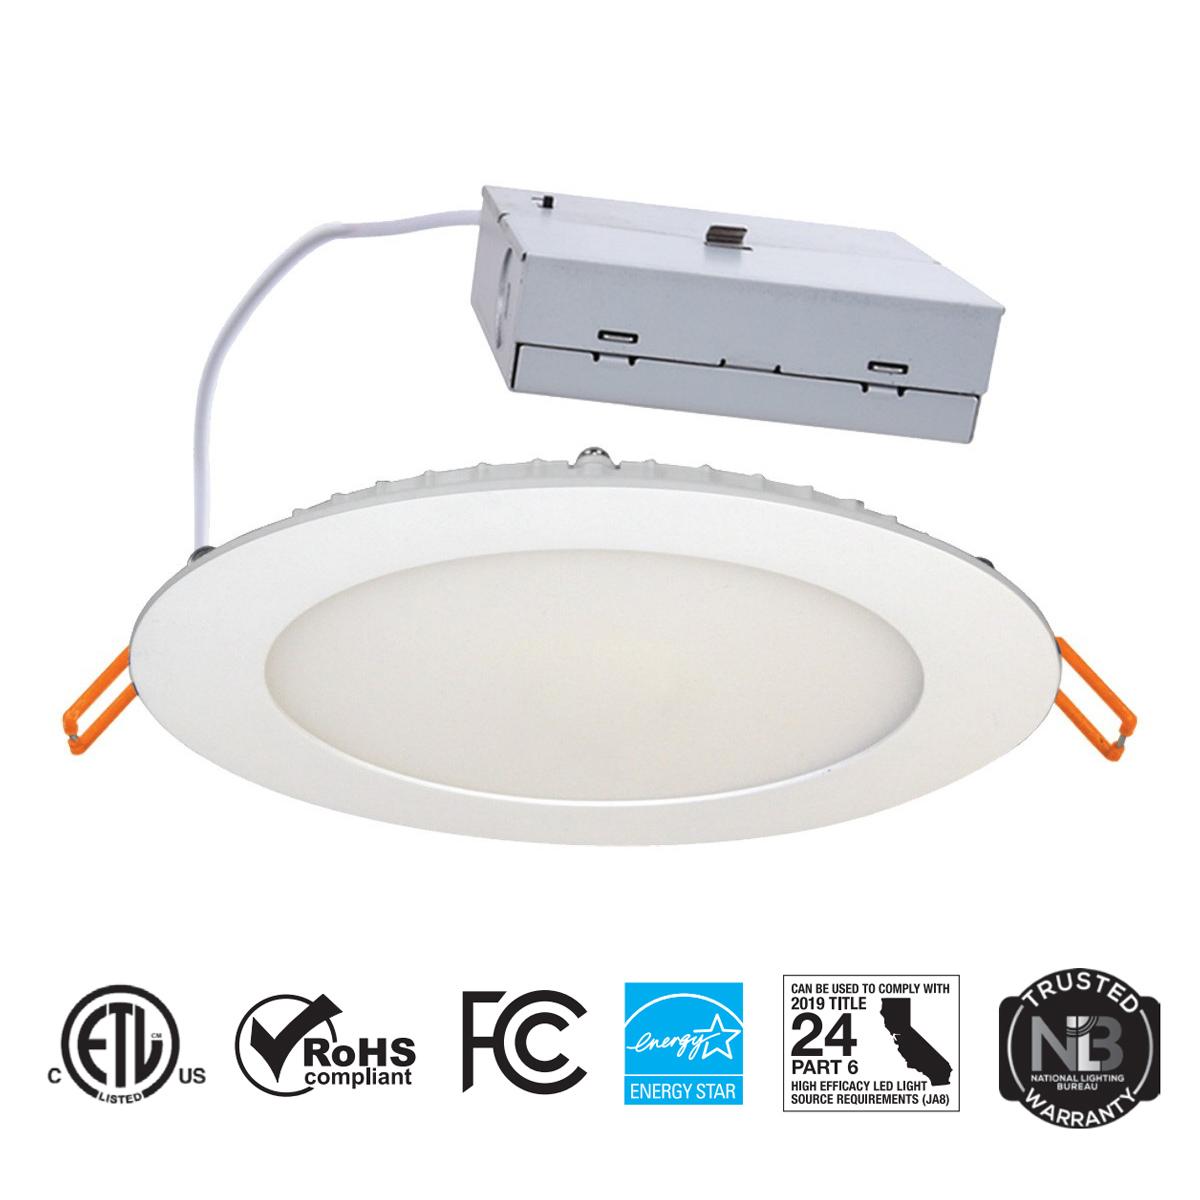 Microdisk LightShield Ultra Slim Canless LED Recessed Light, 6 Inch, 16 Watt, 800 Lumens, Selectable CCT, 2700K to 5000K